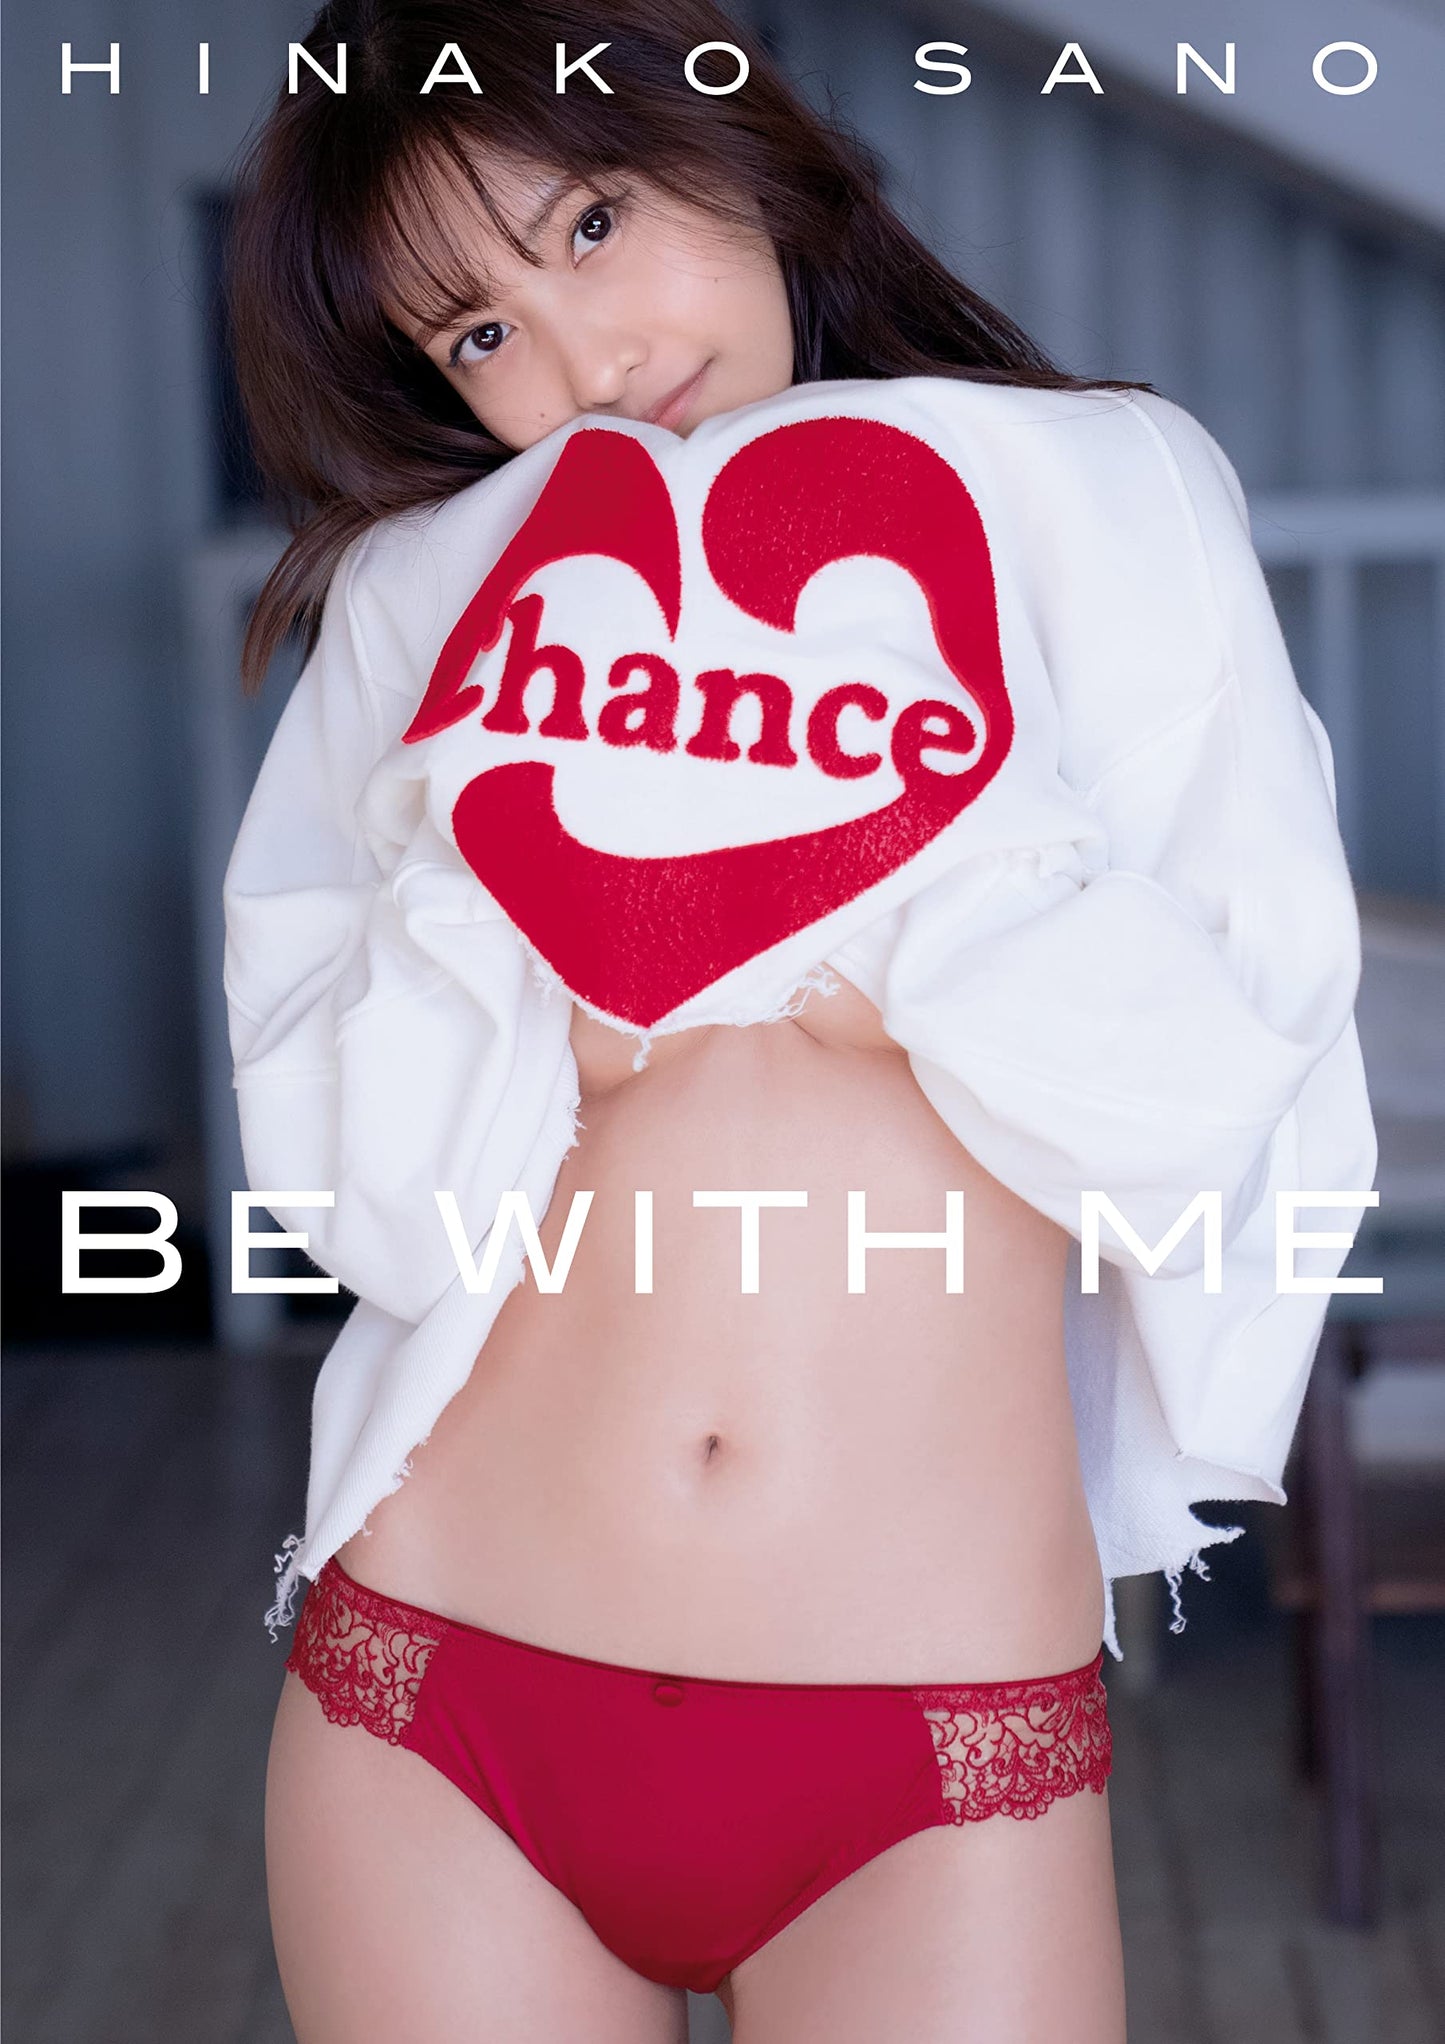 Hinako Sano Photo Book "BE WITH ME "